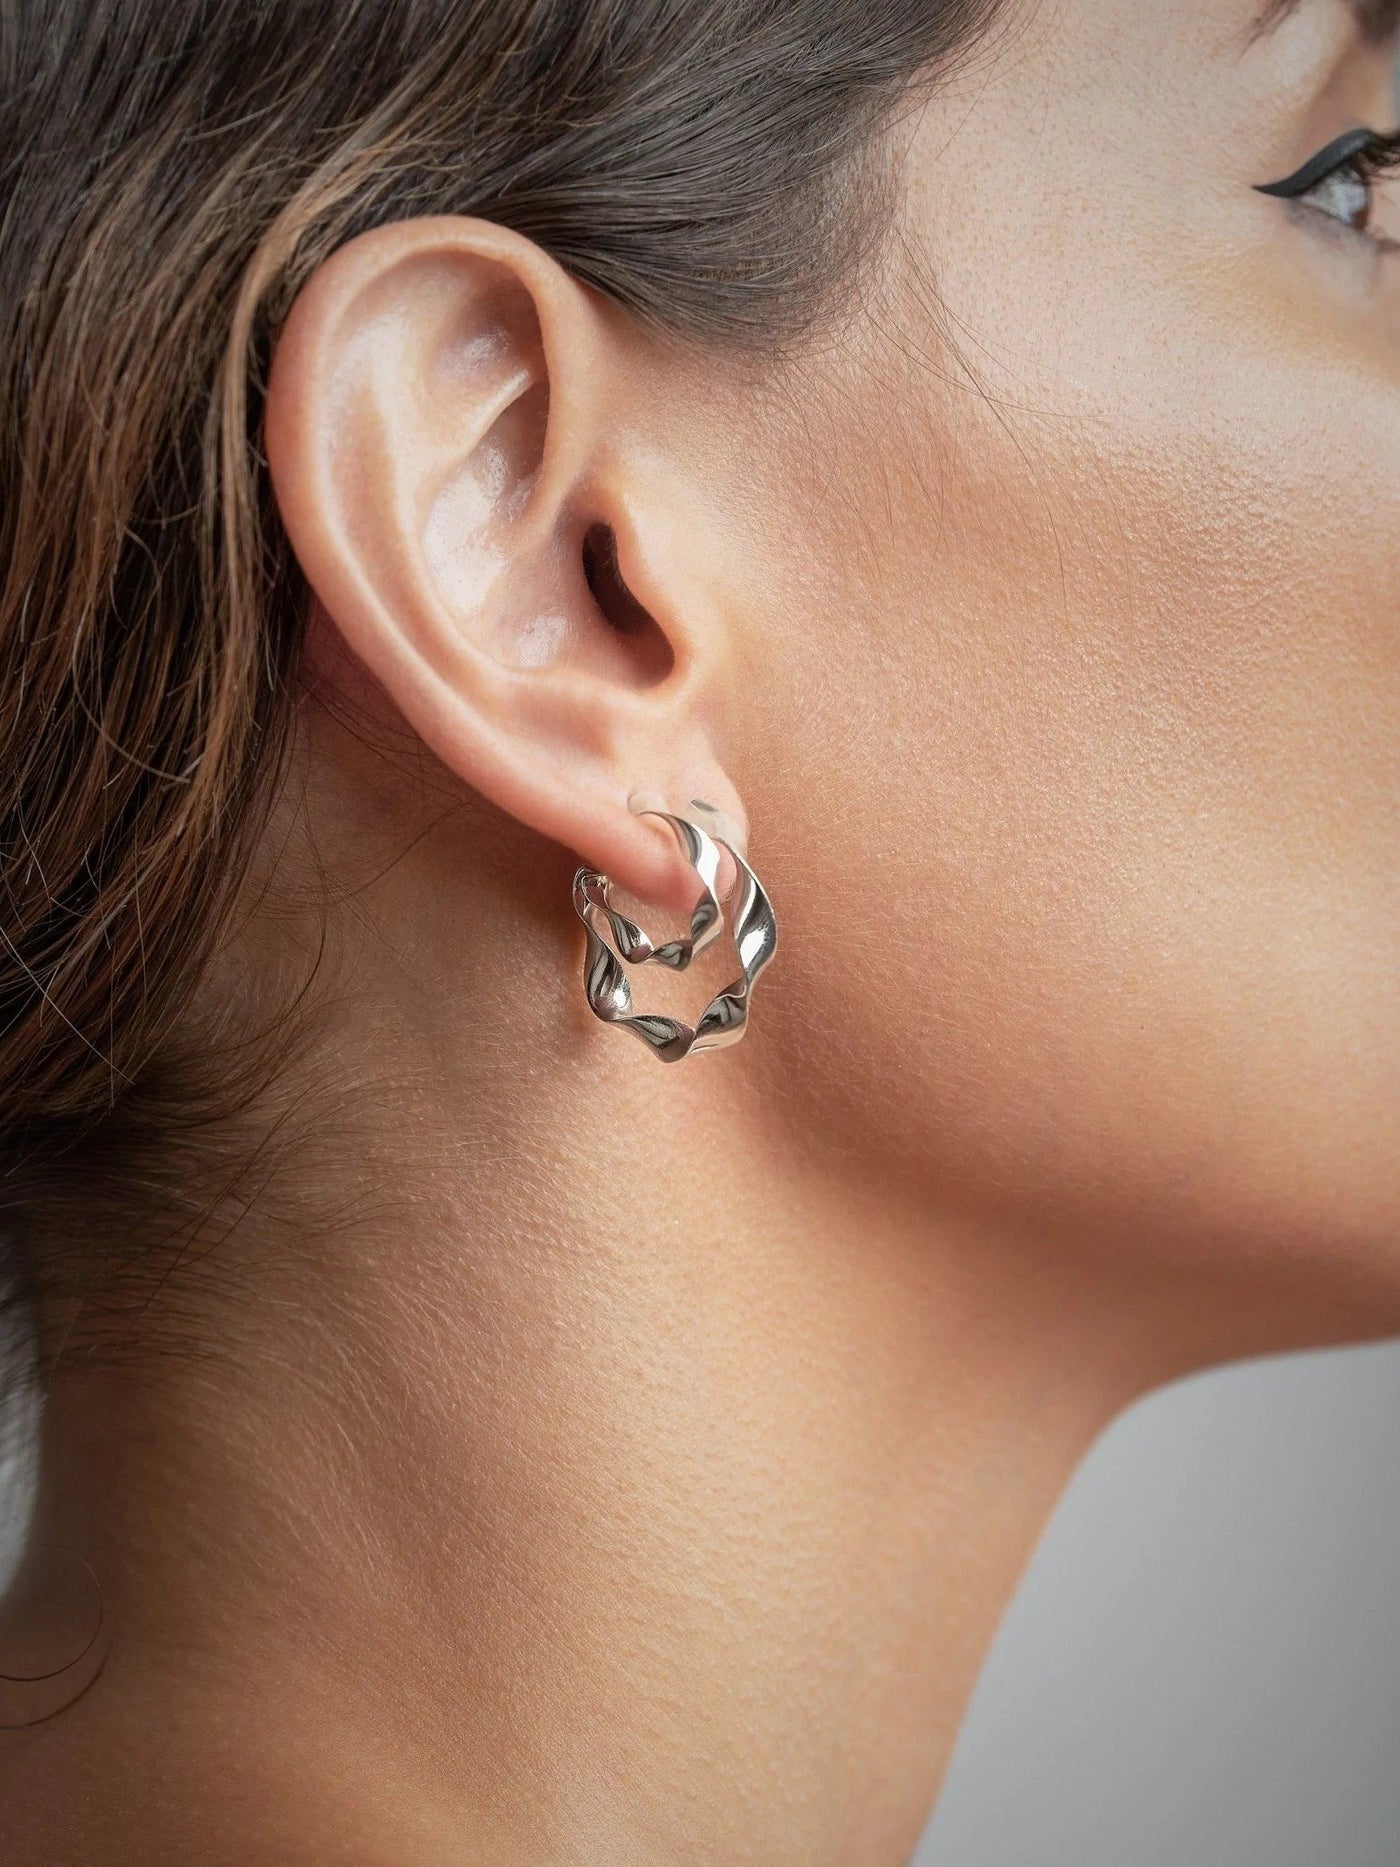 Twisted Hoop Earrings - 925 Sterling SilverBackUpItemsBlack Friday JewelryLunai Jewelry